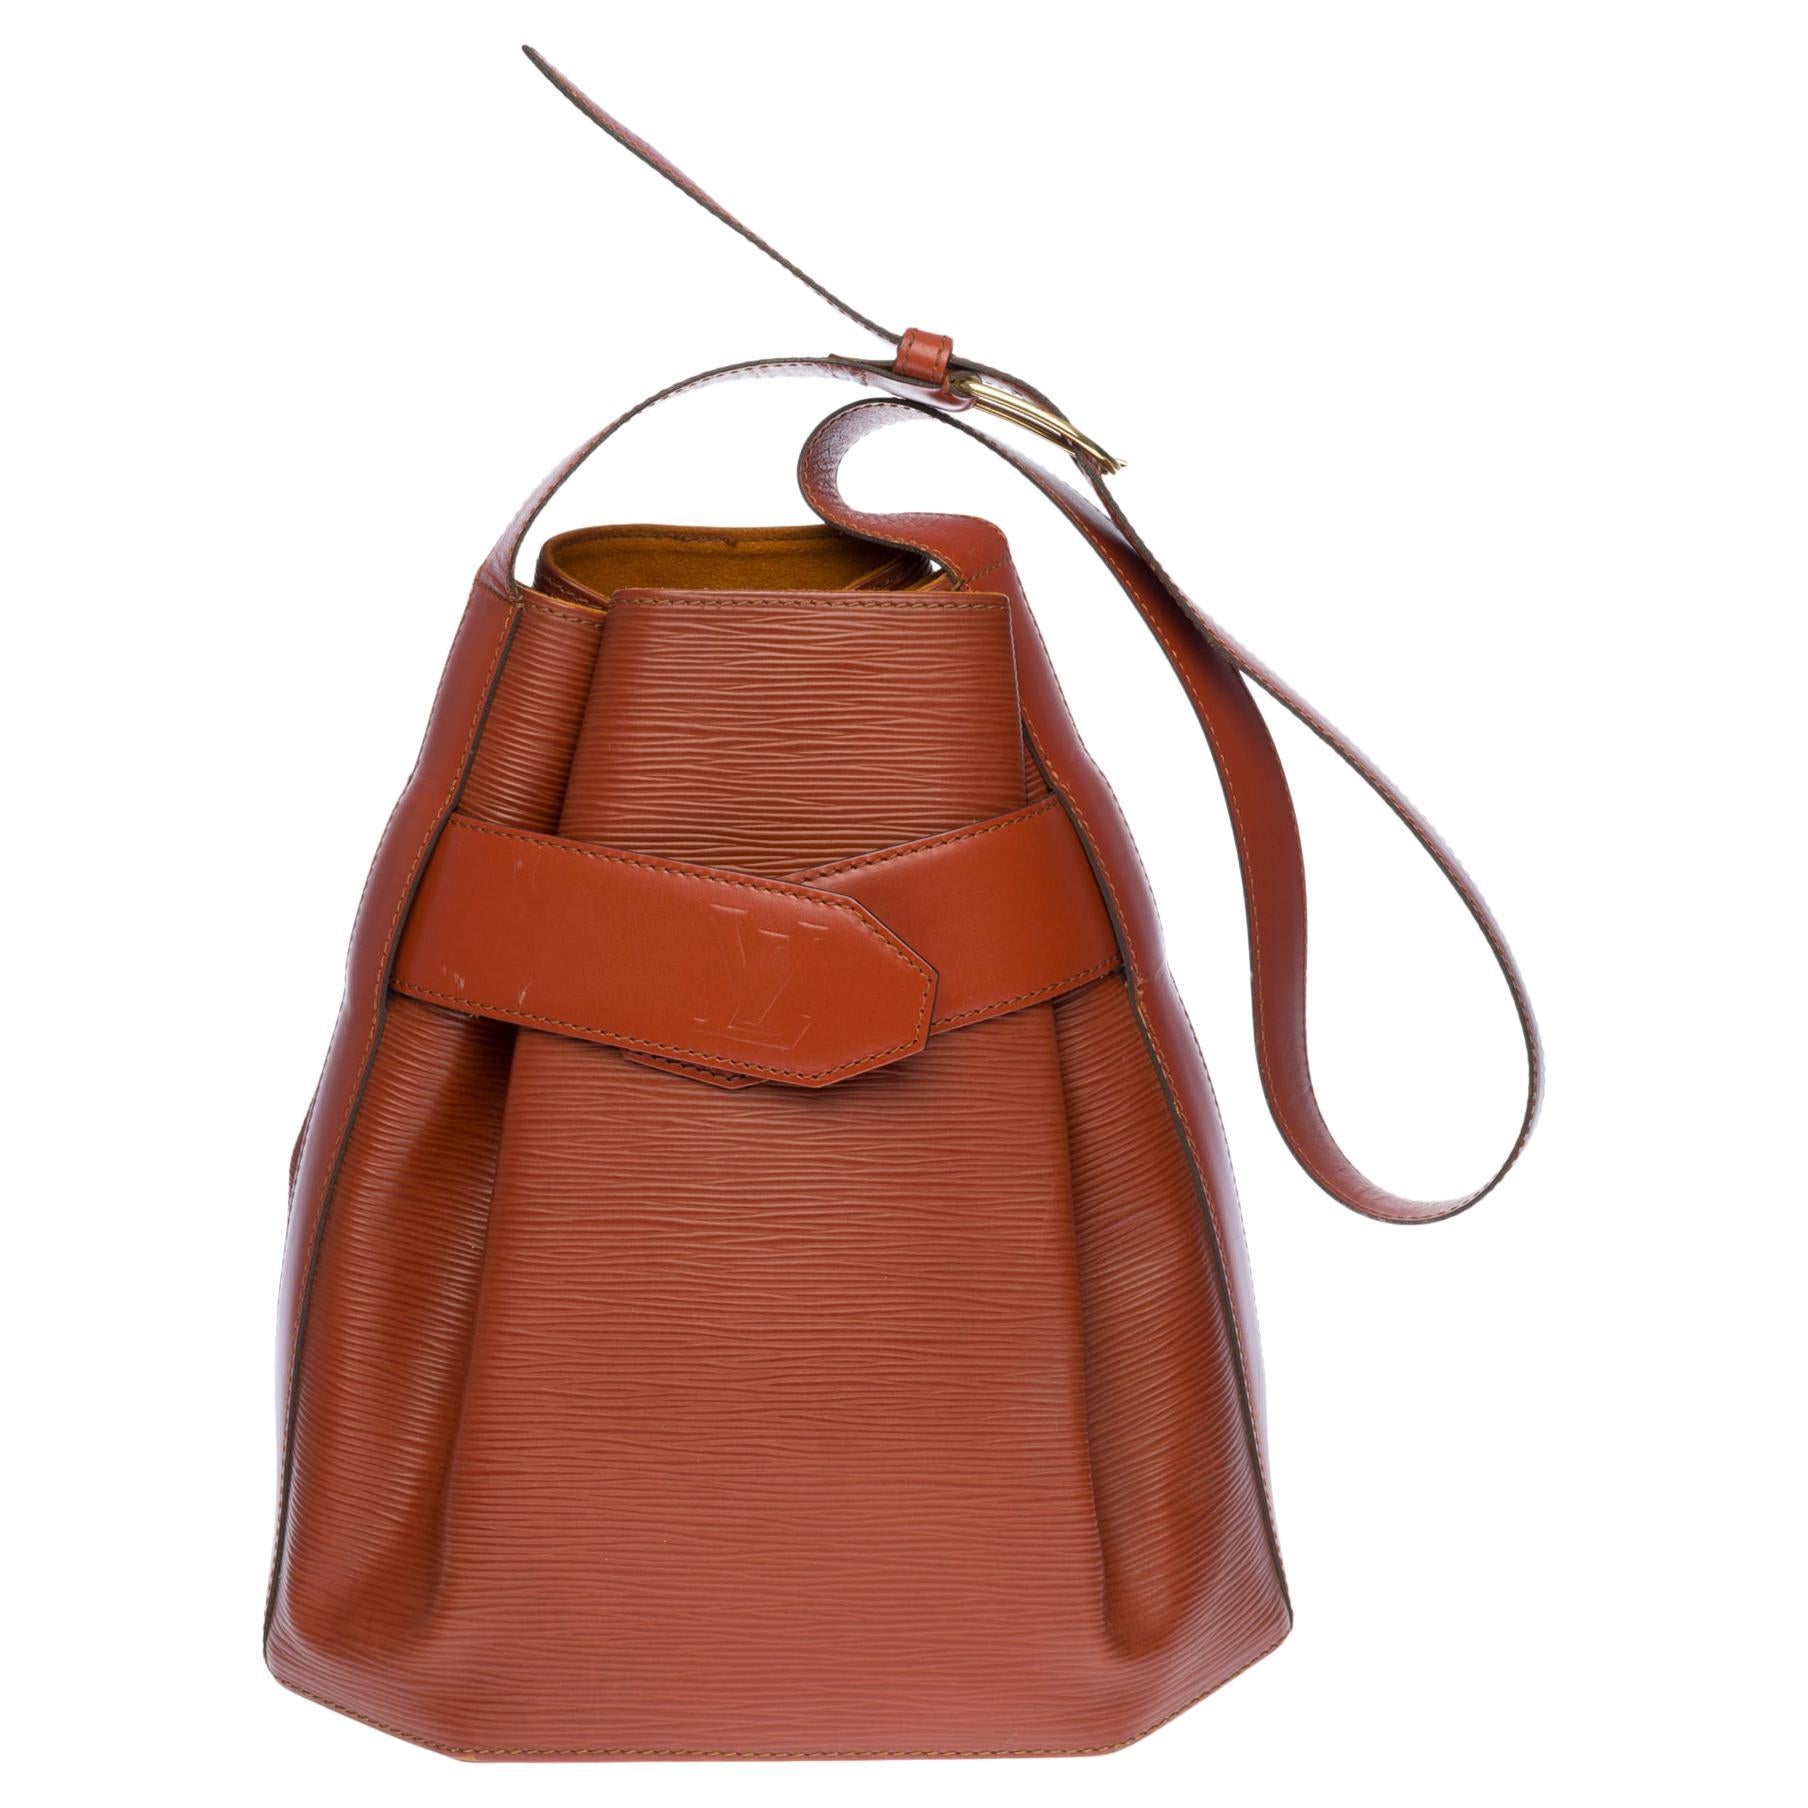 Louis Vuitton Sac d'épaule Backpack in brown épi leather, GHW